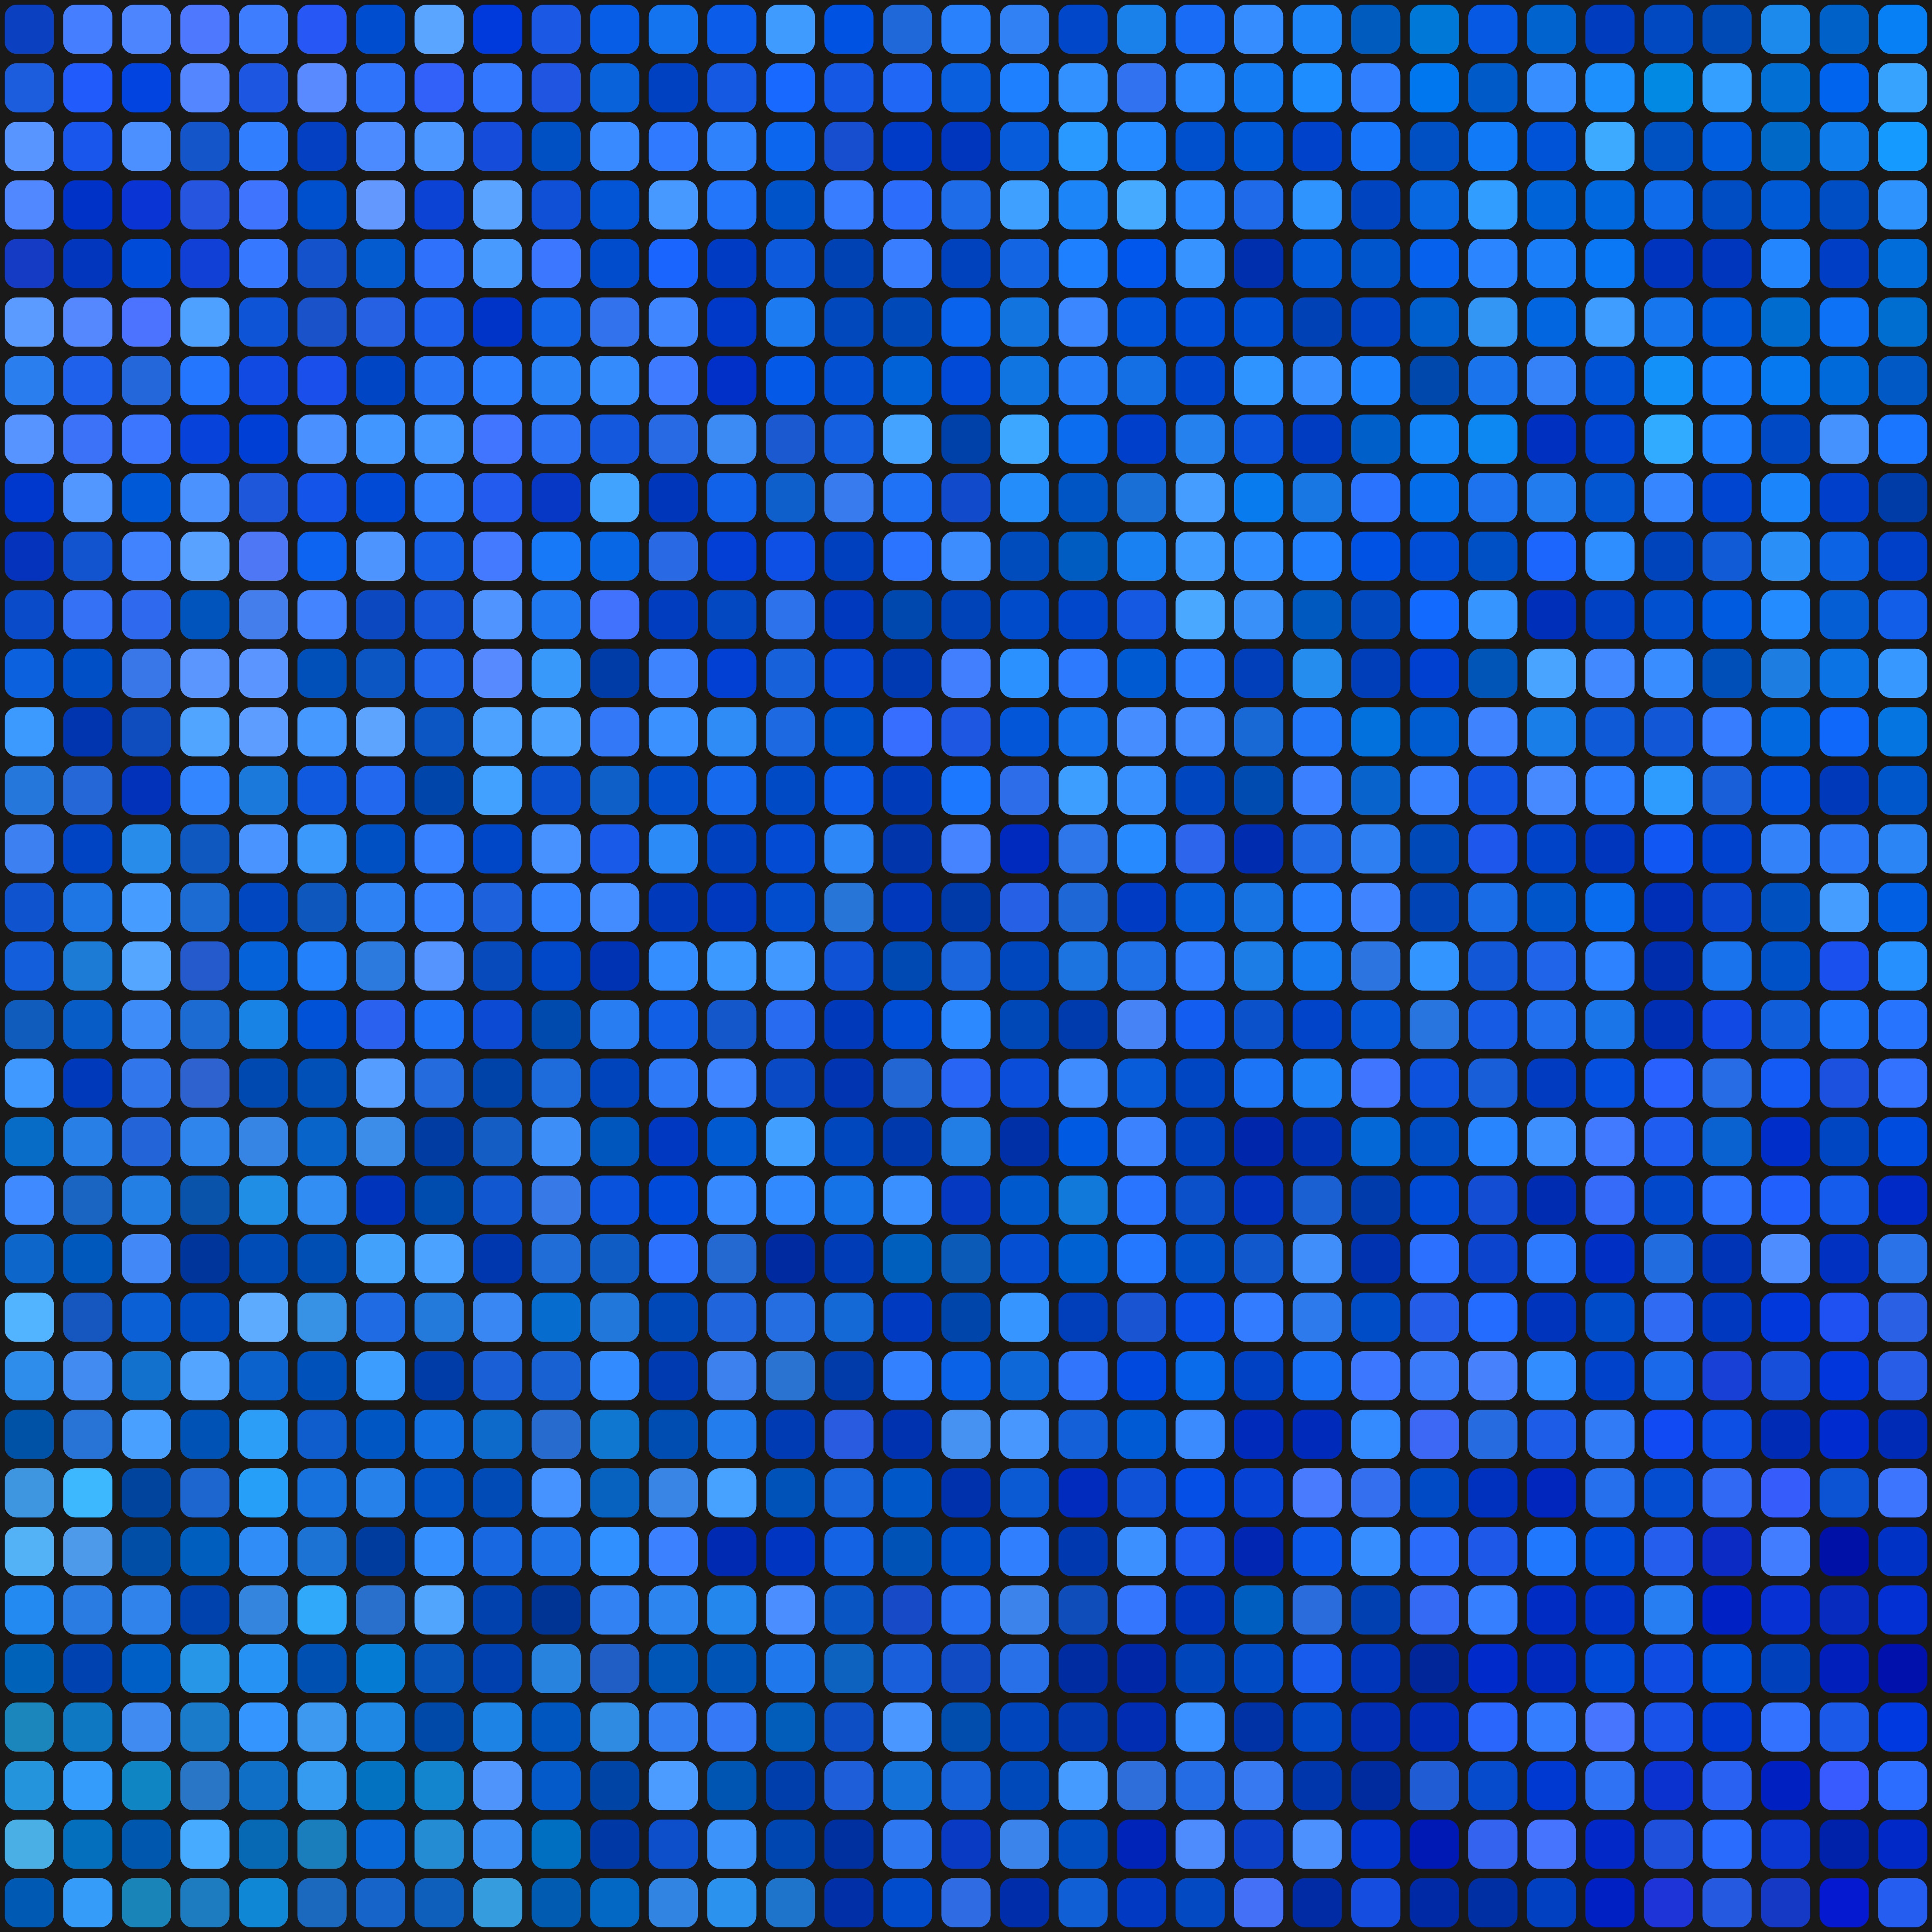 Mosaic Desktop Background Image